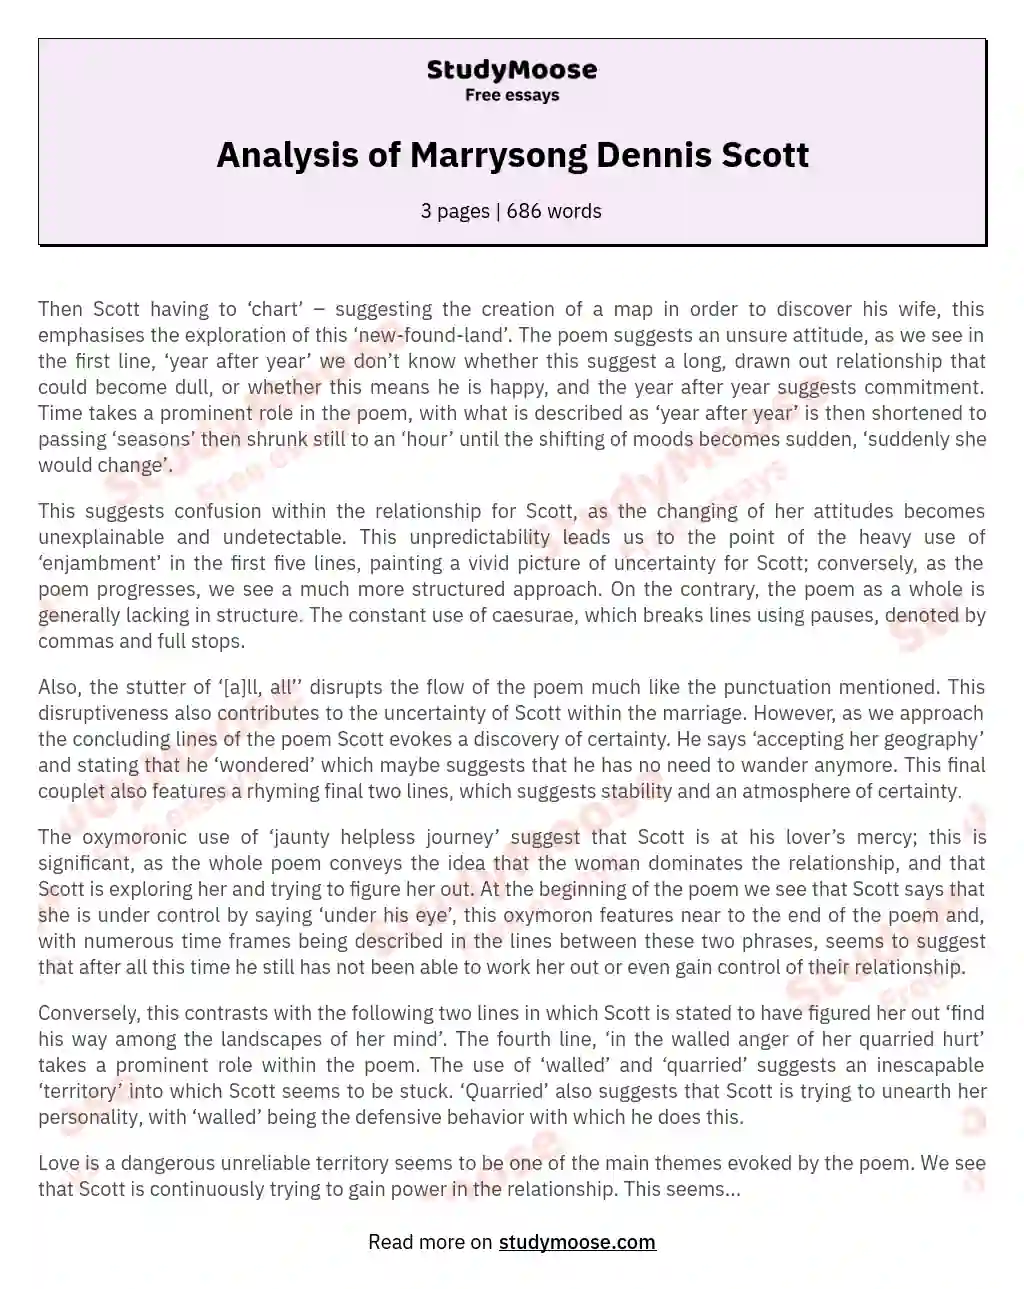 Analysis of Marrysong Dennis Scott